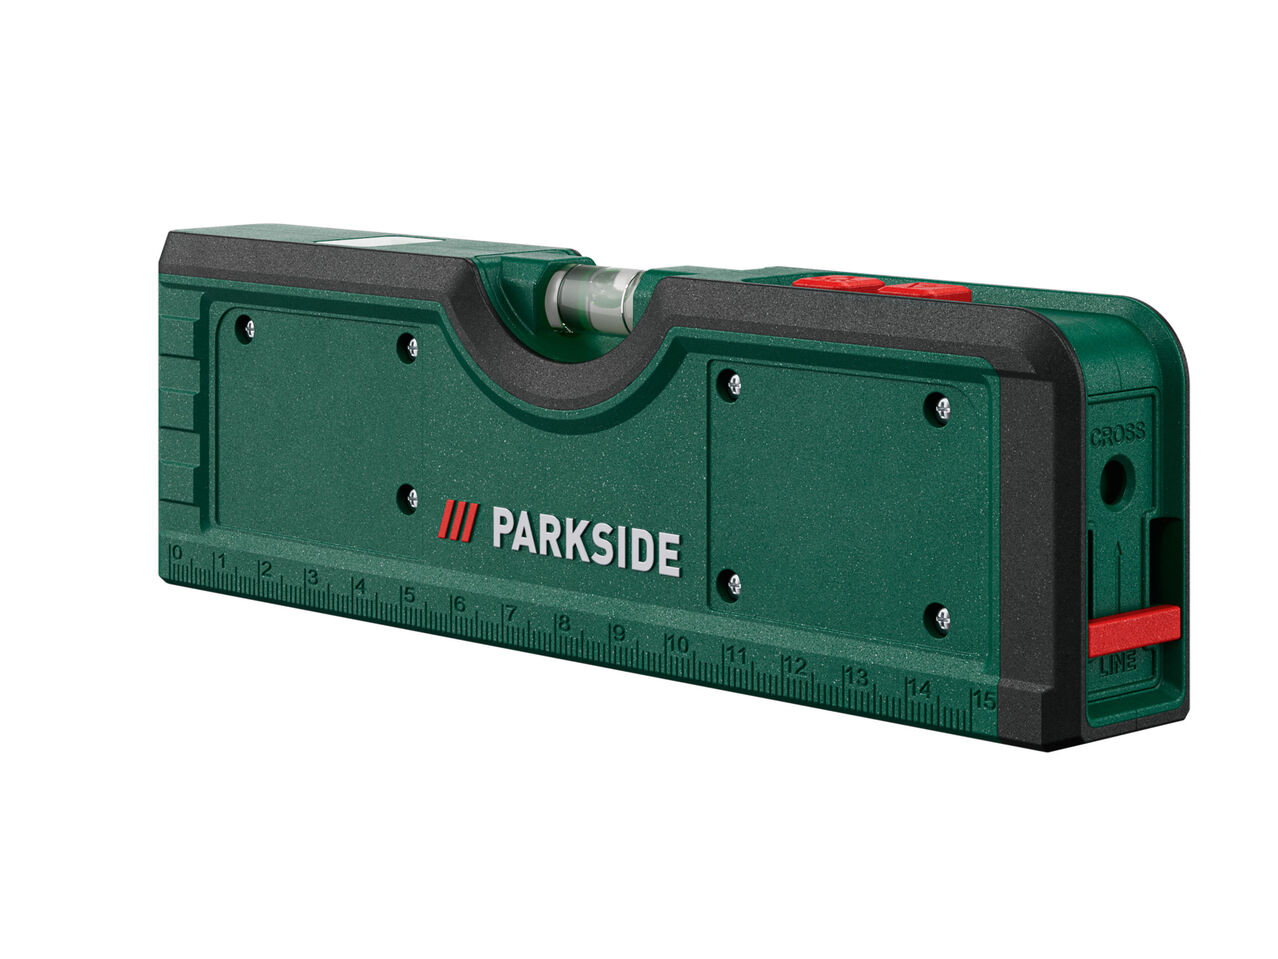 PARKSIDE® Poziomica laserowa , cena 49,99 PLN 
PARKSIDE® Poziomica laserowa 
- ...